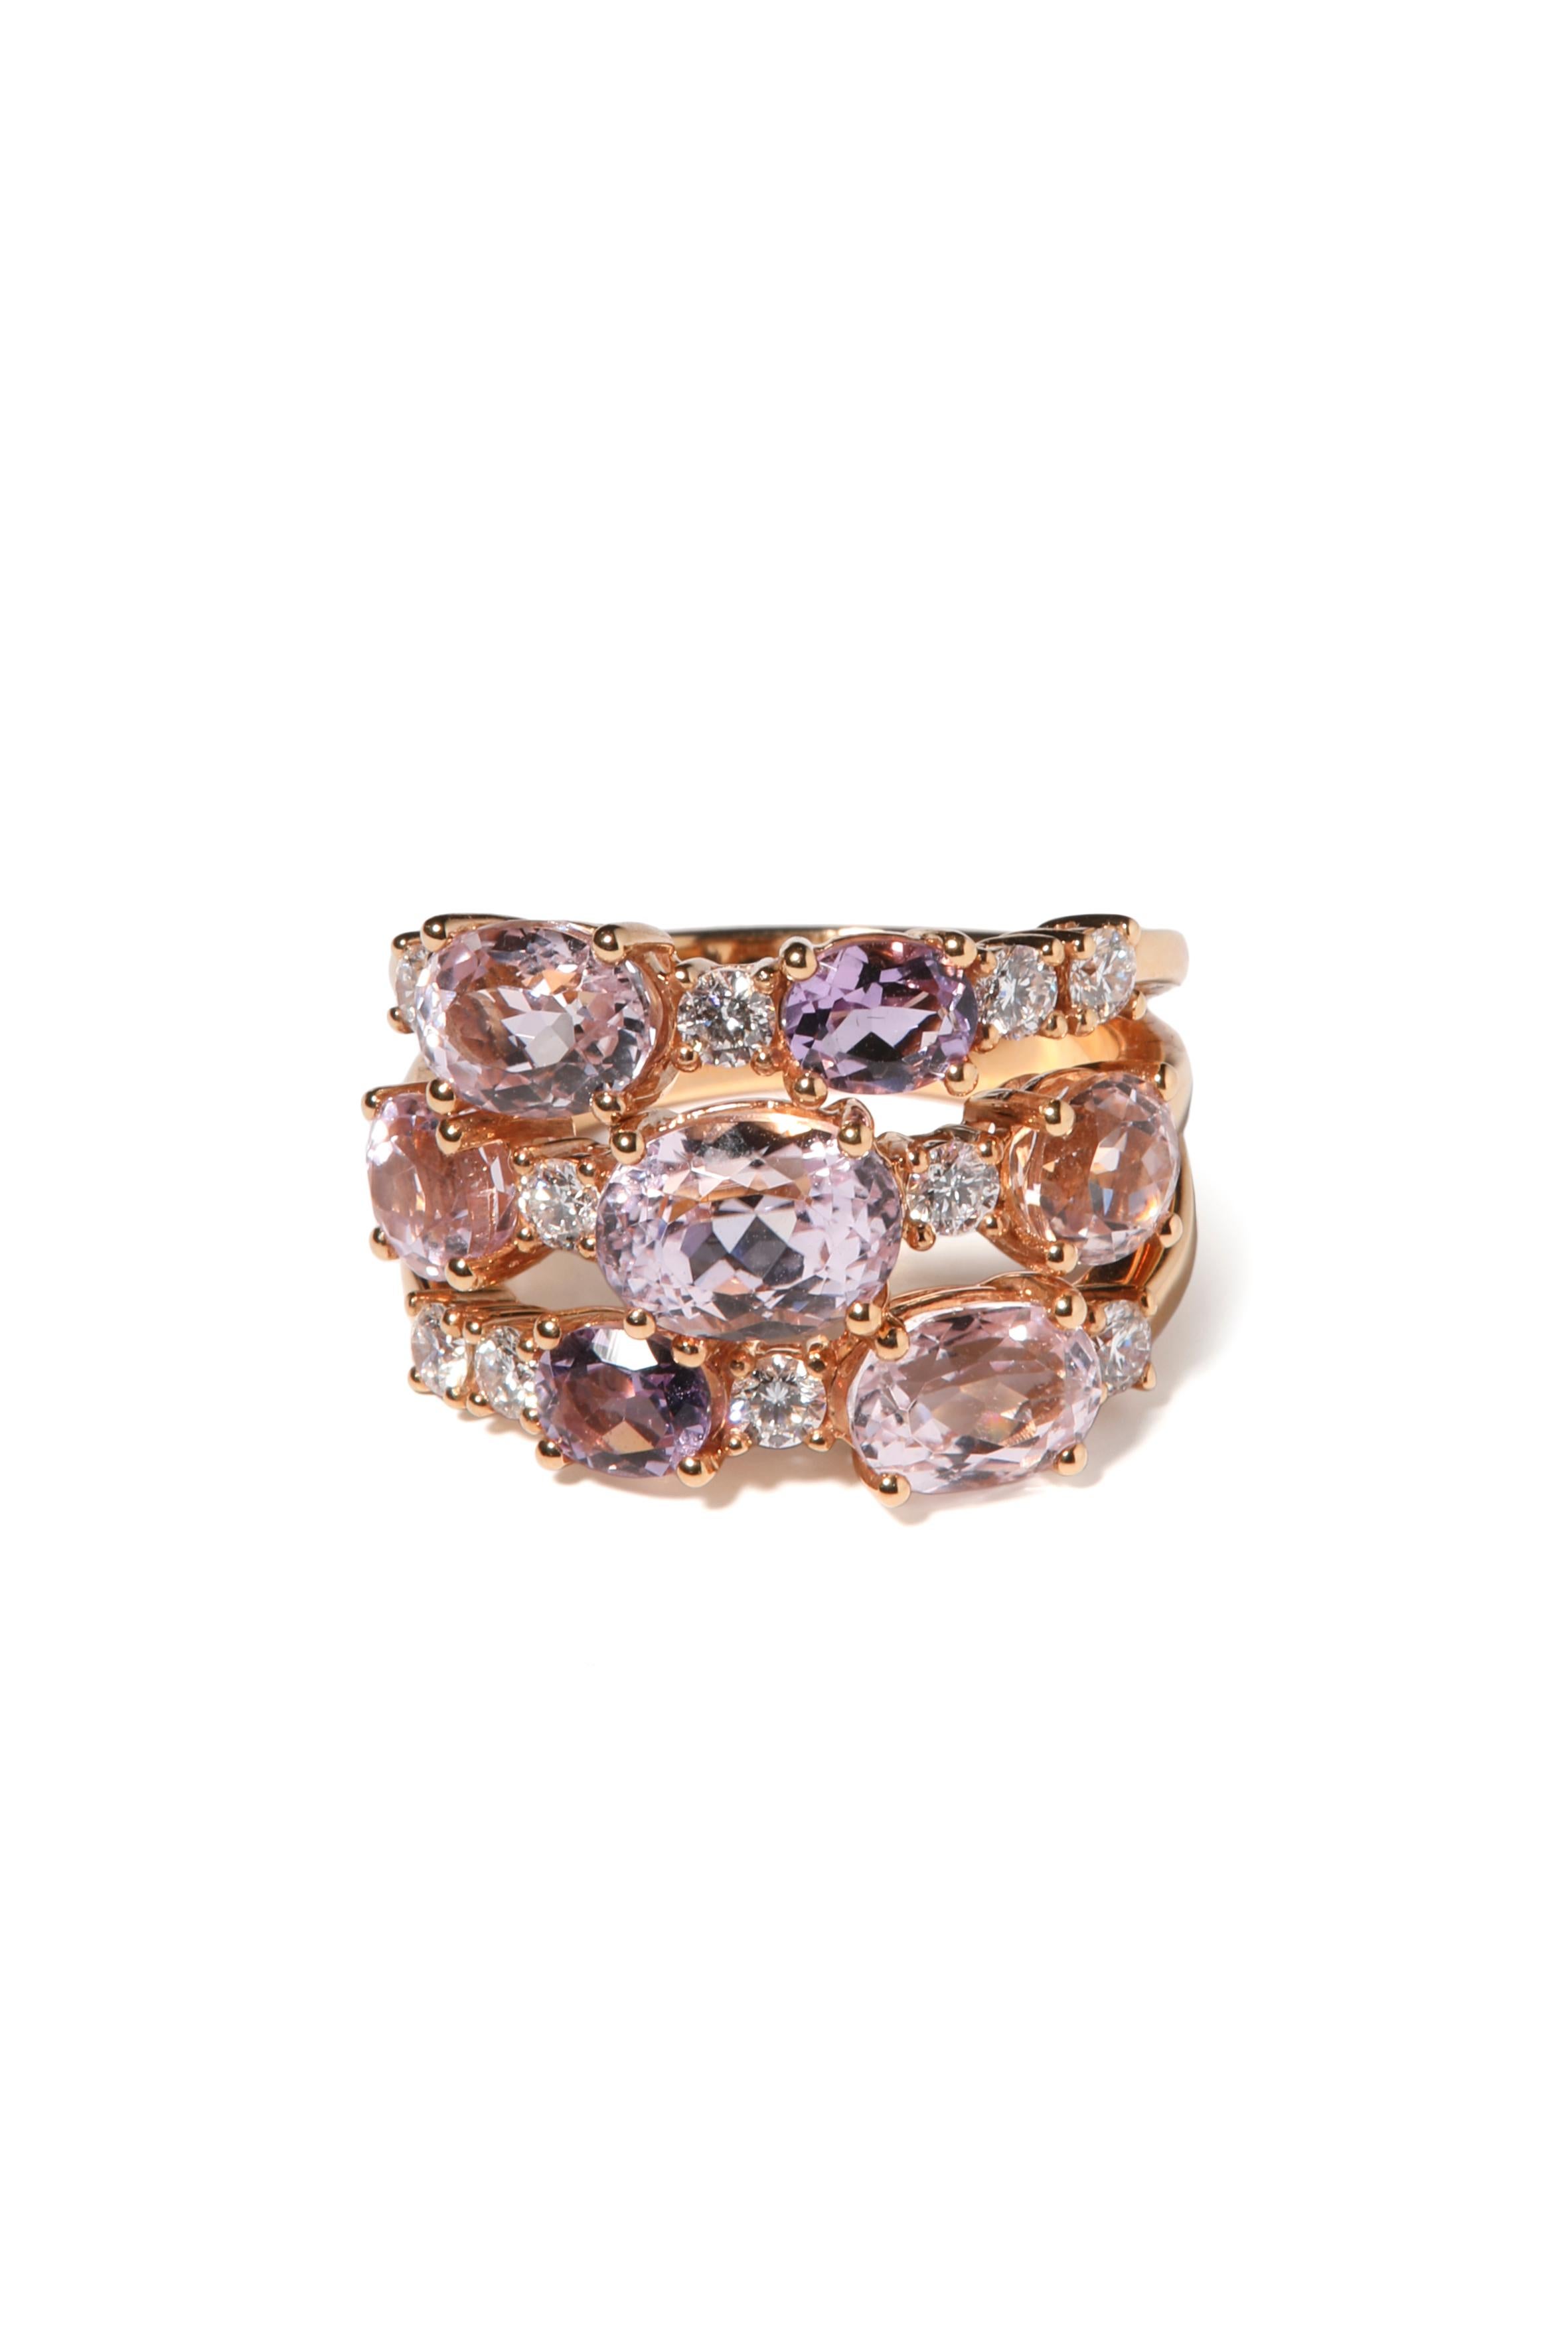 18 Karat Pink Gold Ring with Amethyst, Kunzite and Diamonds 2